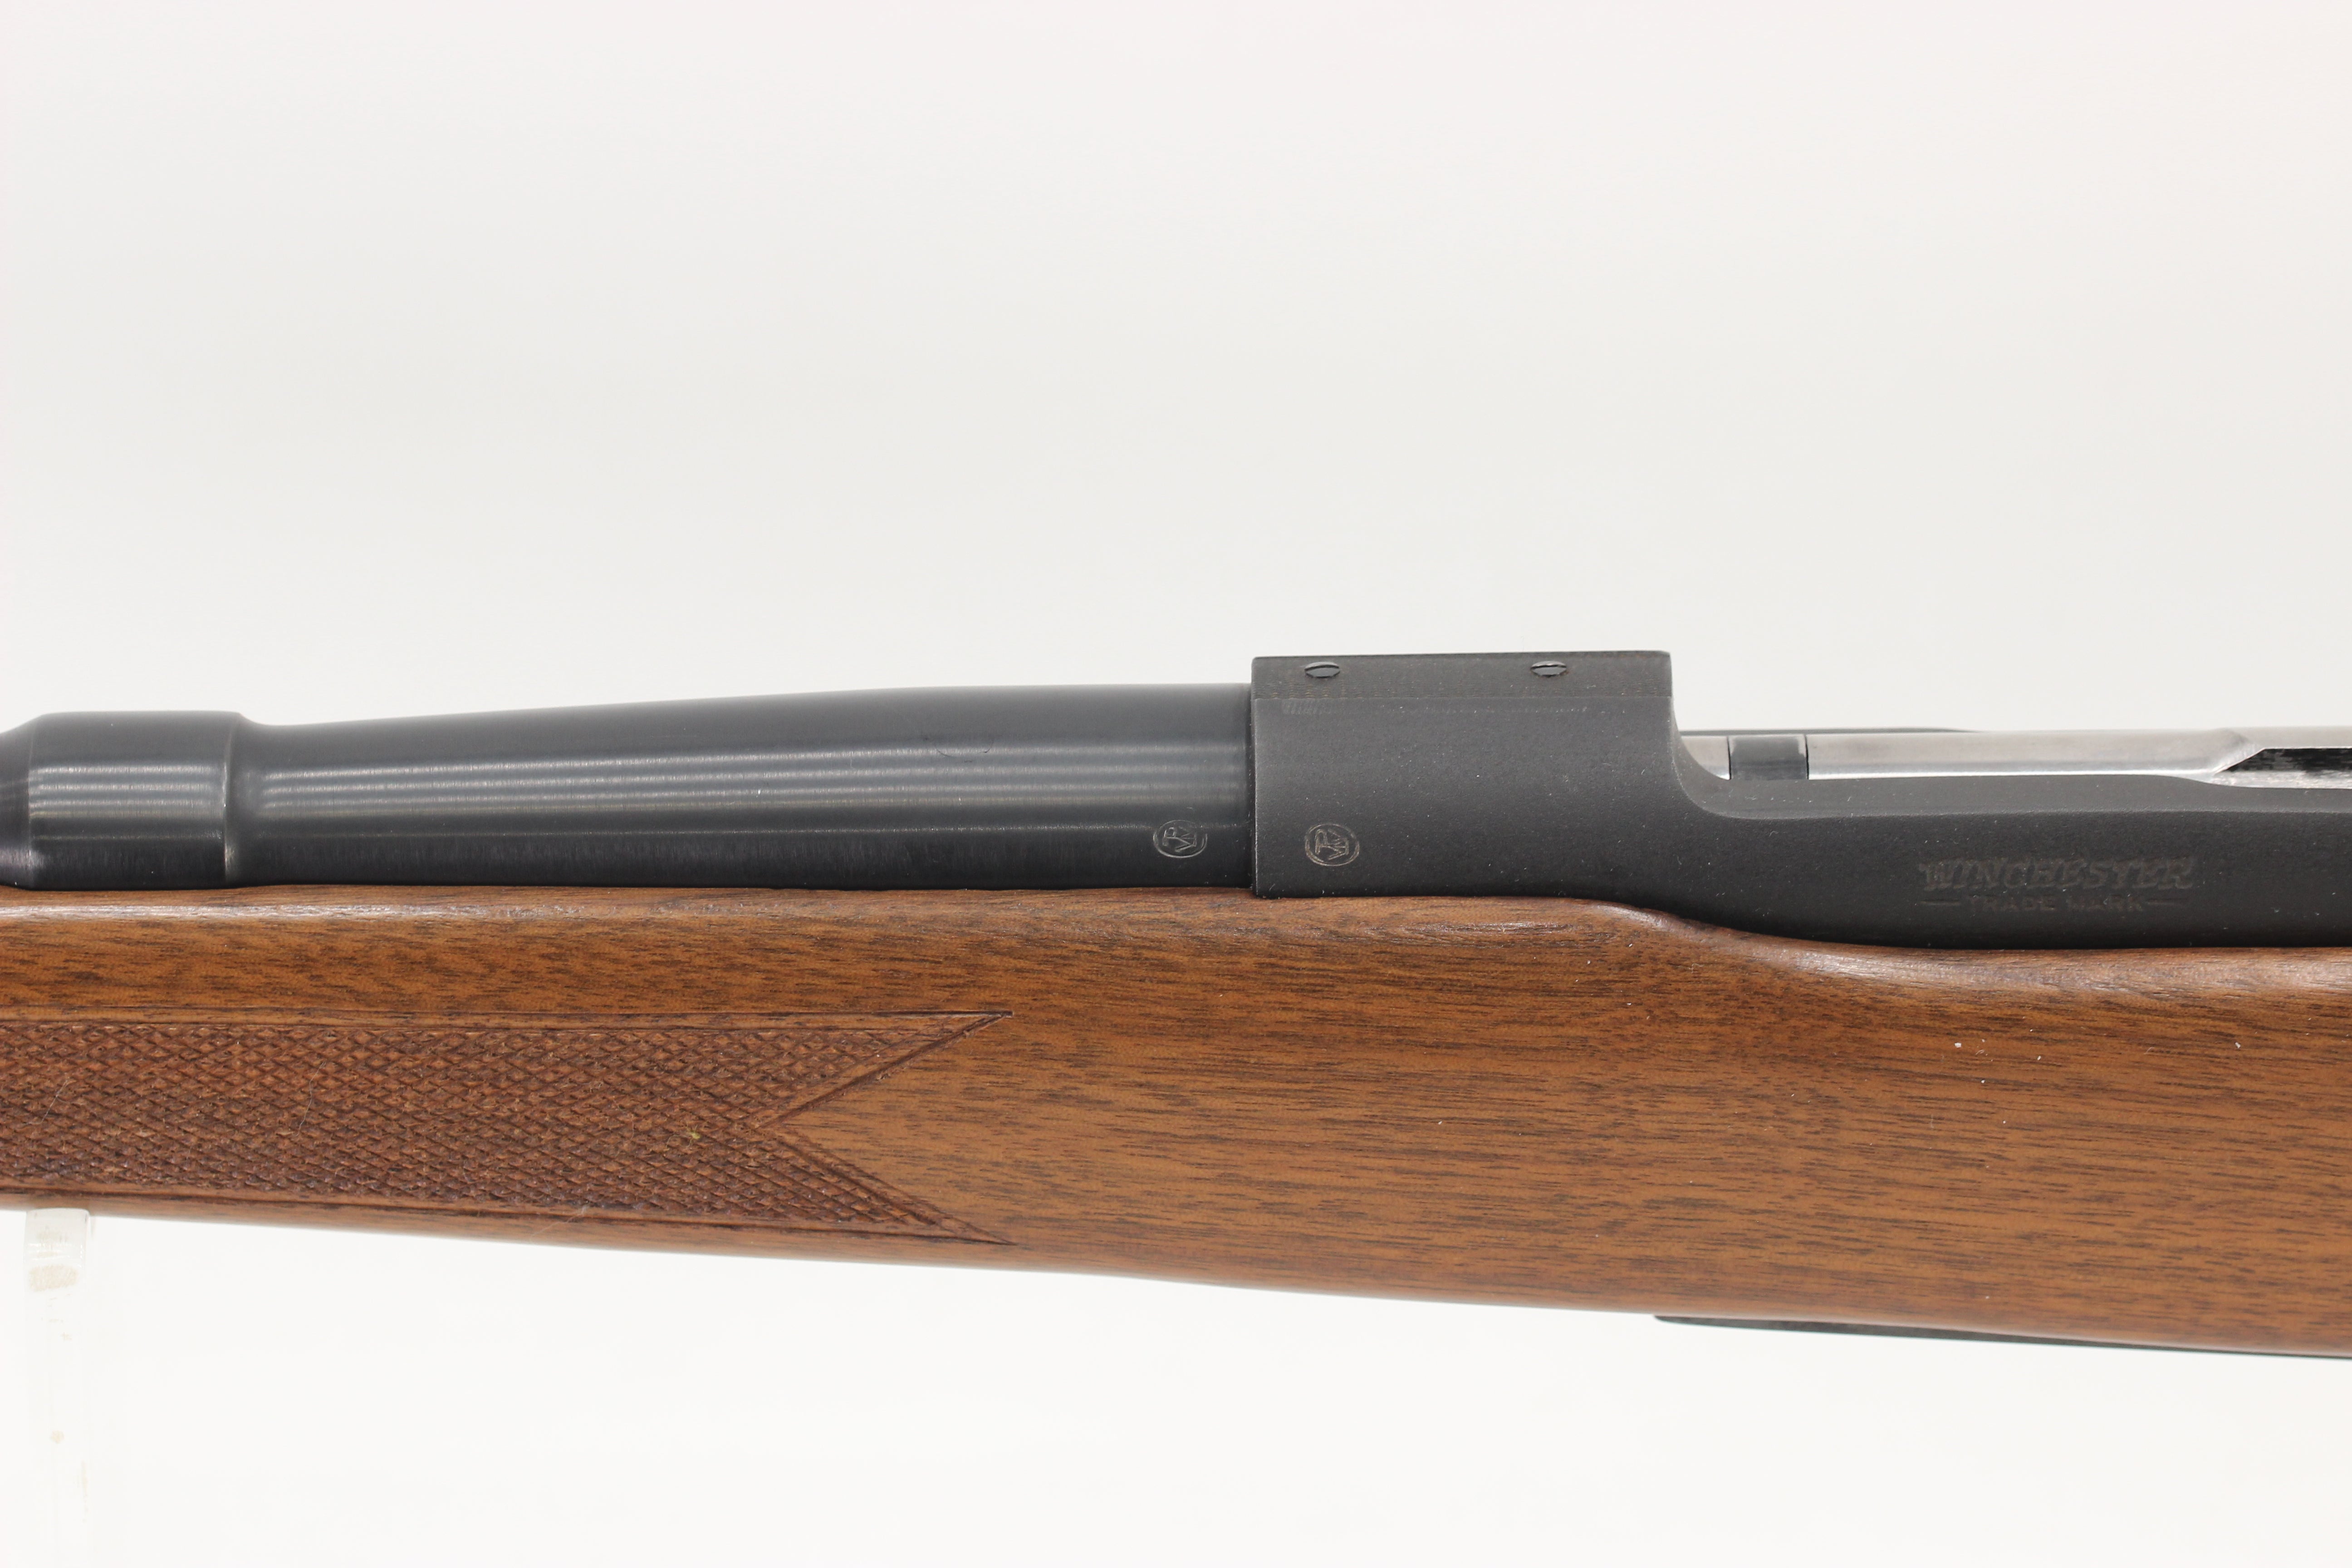 .264 Win Magnum Sightless Rifle - 1960